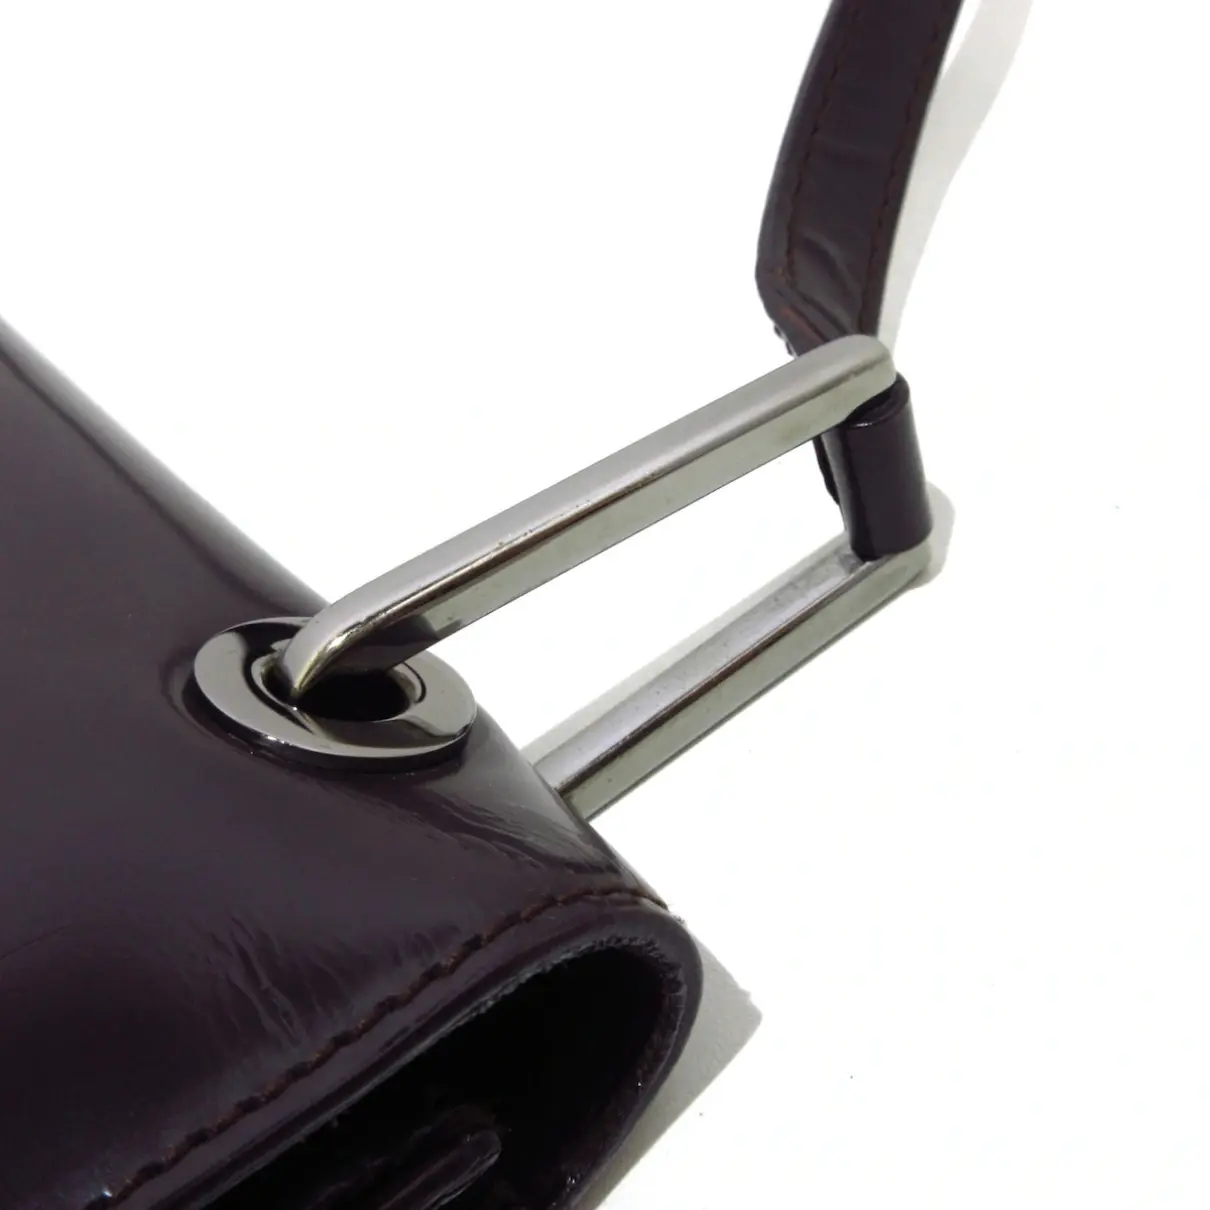 Patent leather handbag Gucci